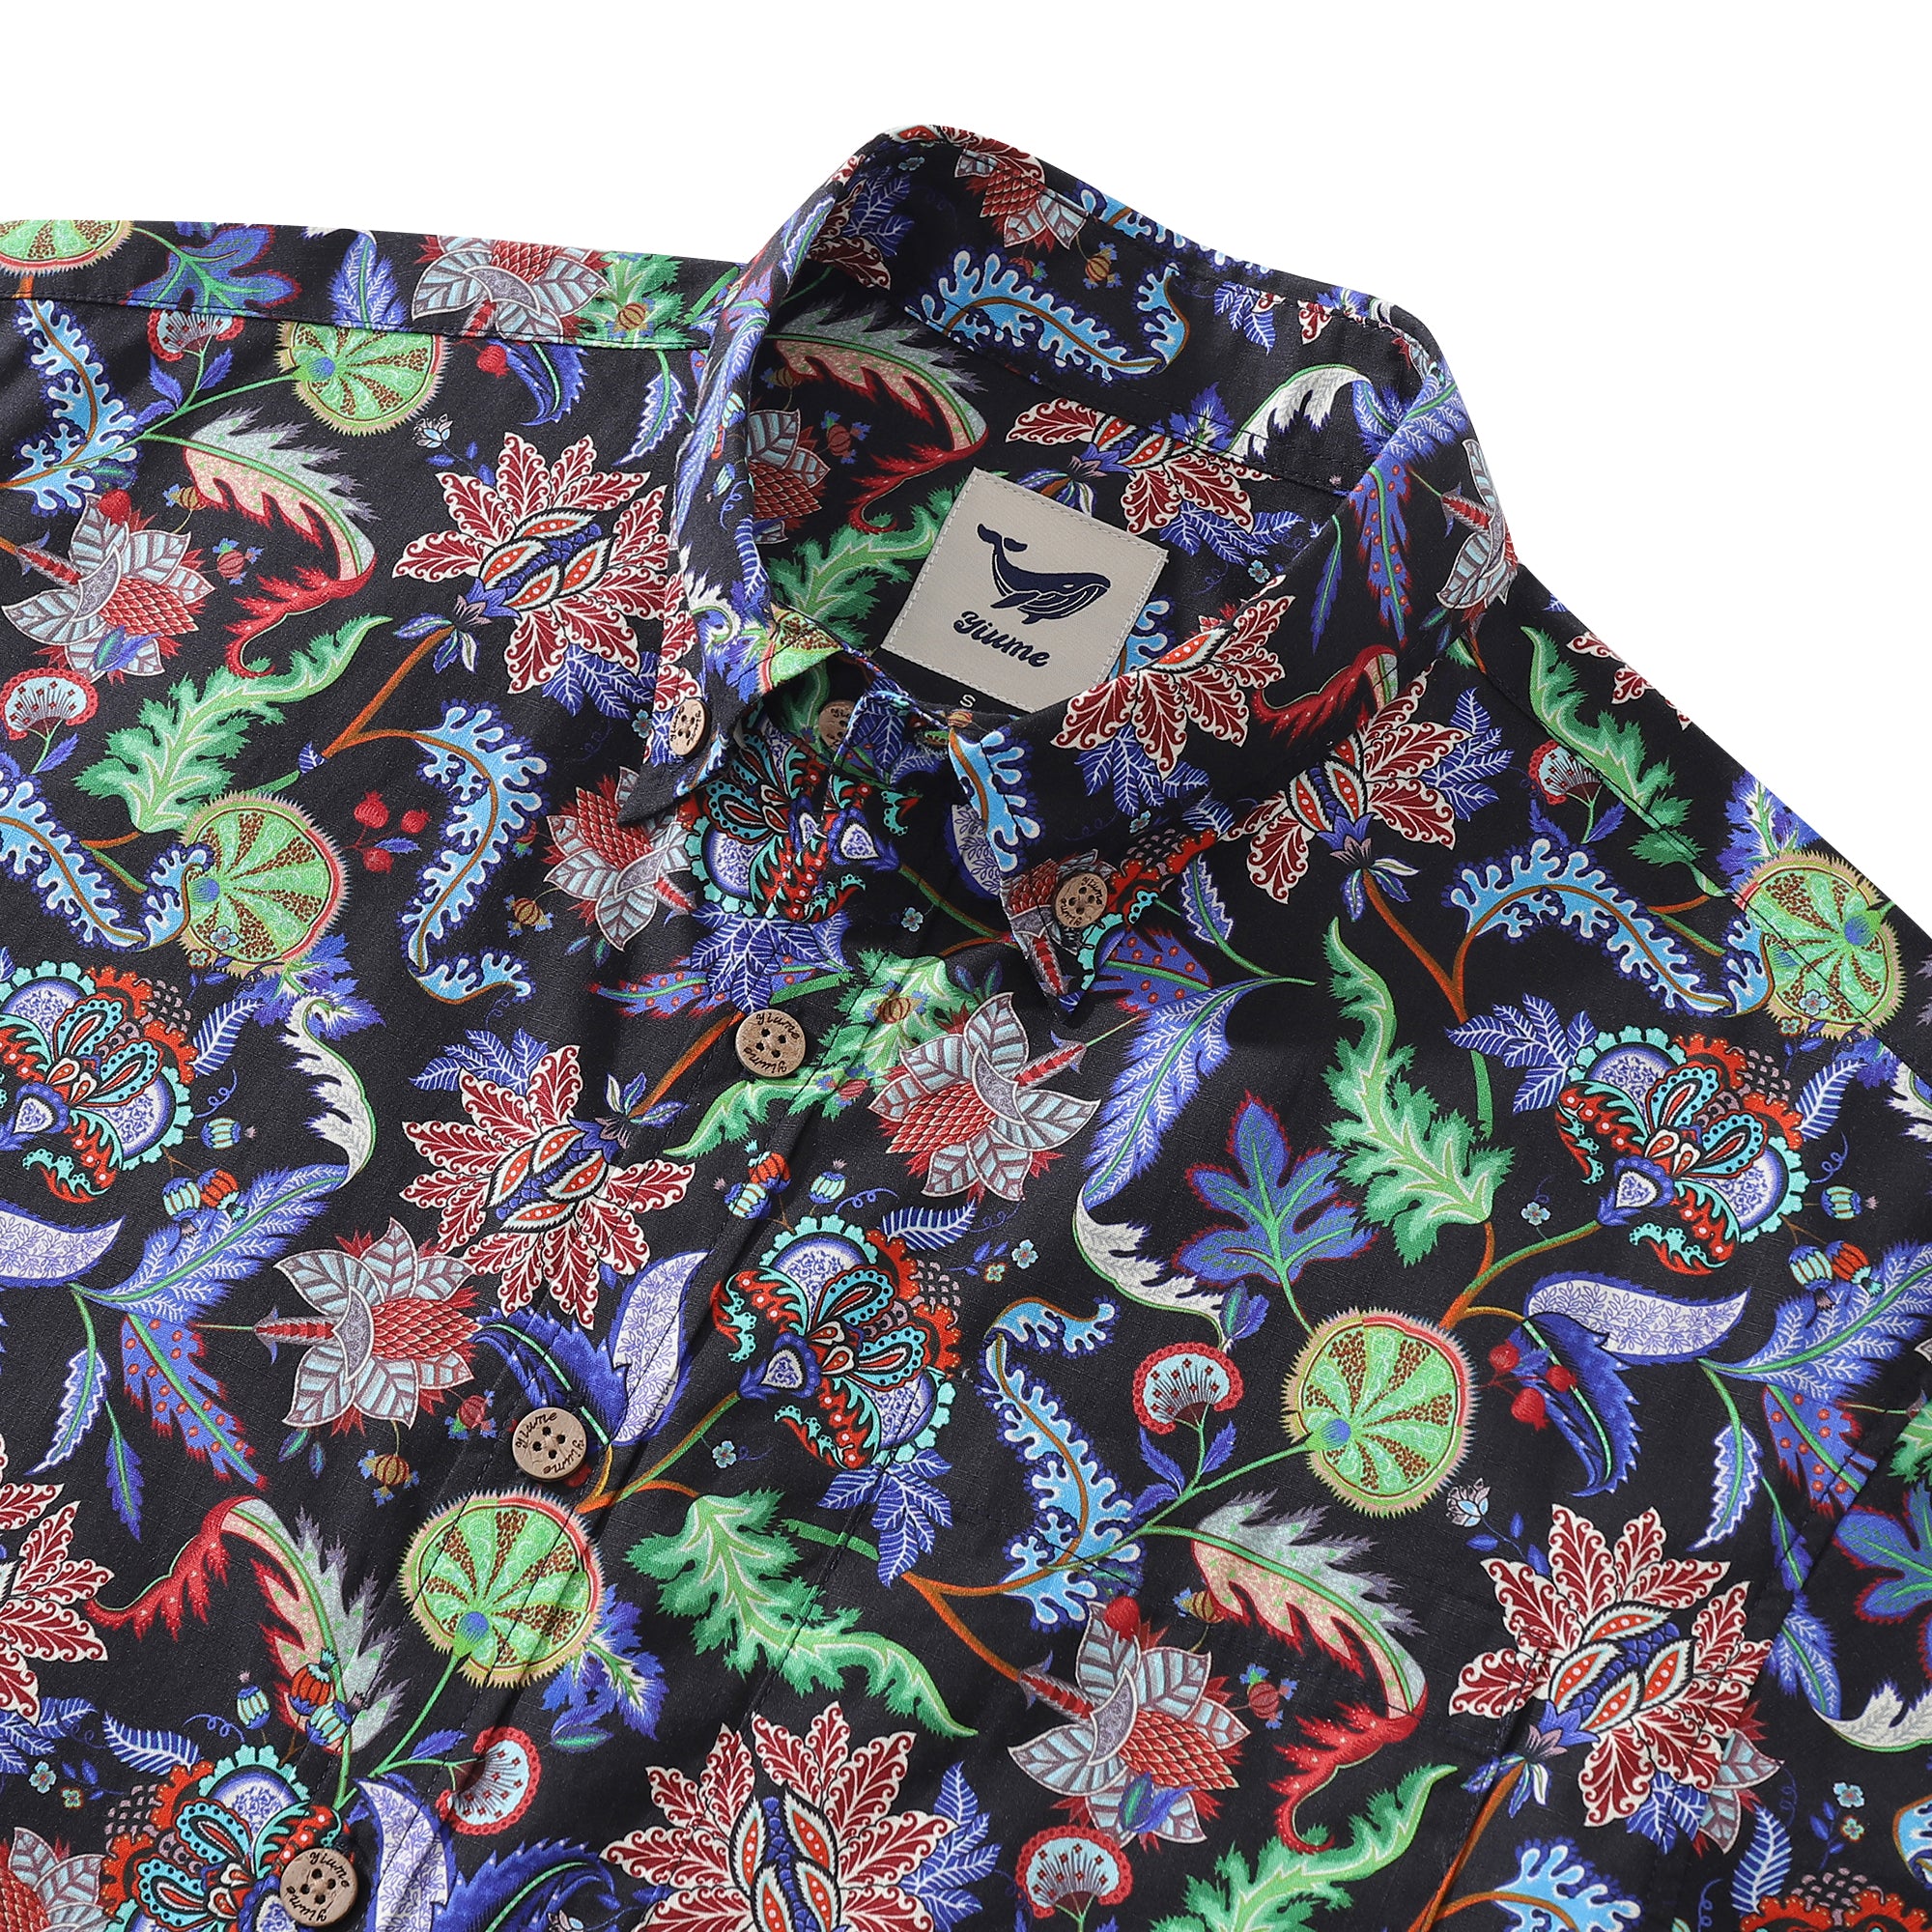 Men's Hawaiian Shirt Vibrant Vines Print Cotton Button-down Short Sleeve Aloha Shirt